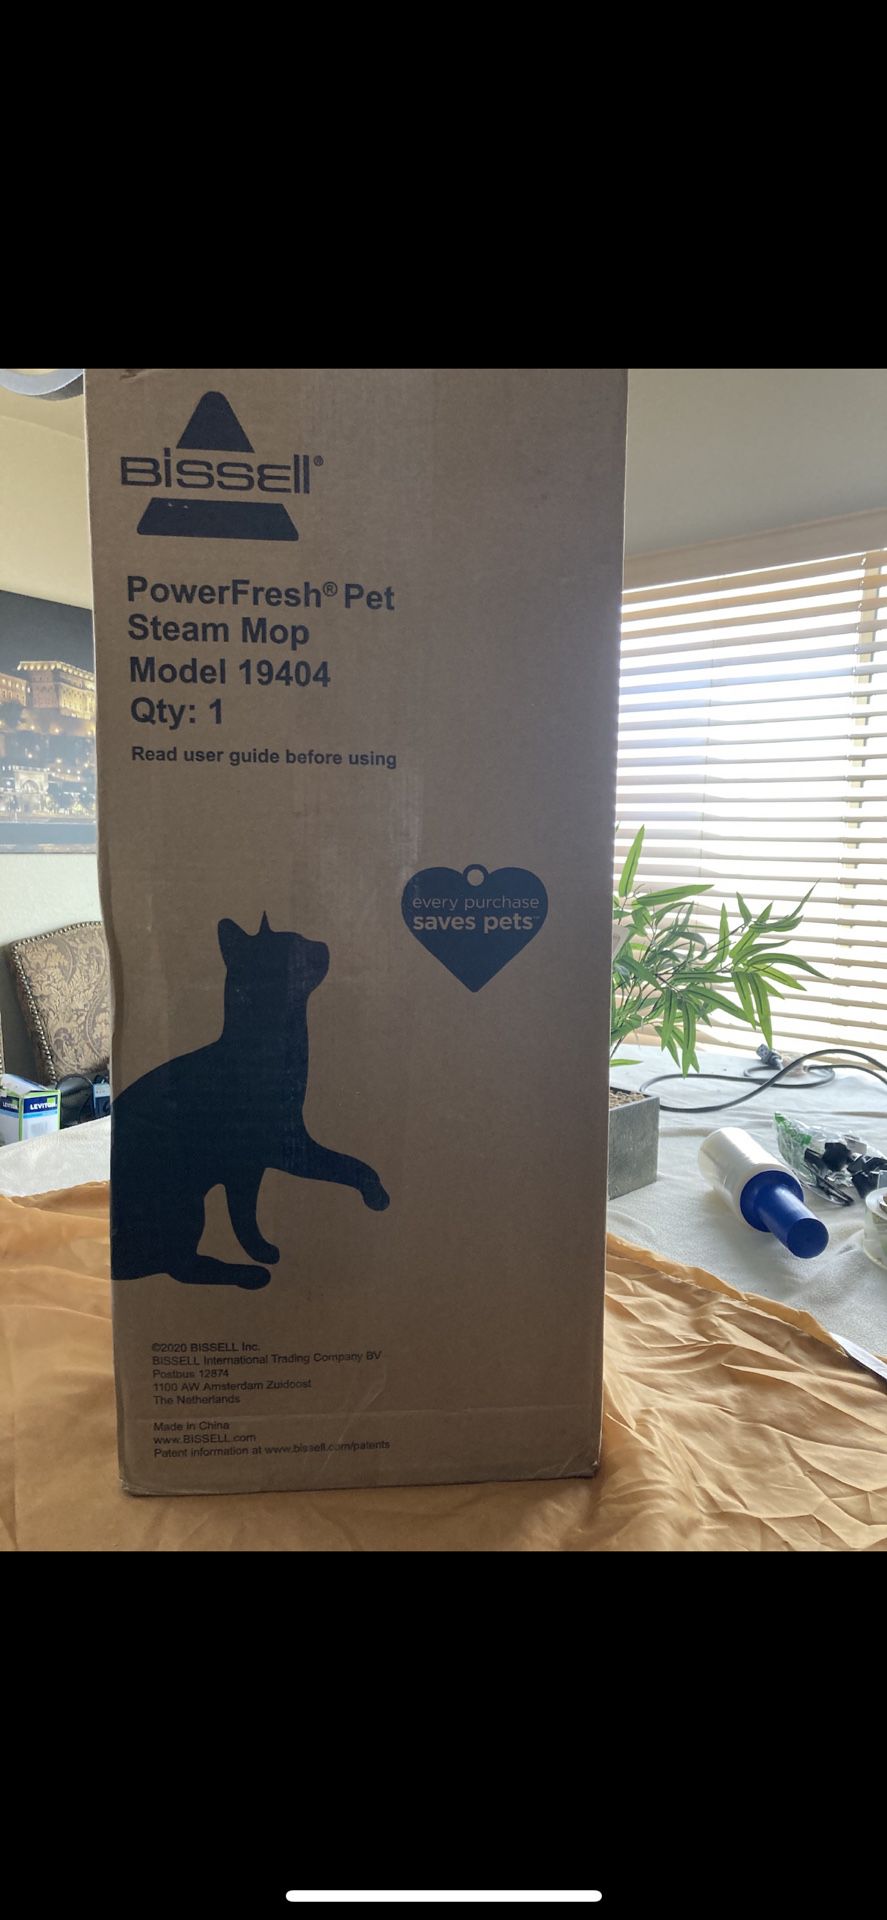 PowerFresh® Pet Scrubbing & Sanitizing Steam Mop (new Open Box) Retail $92